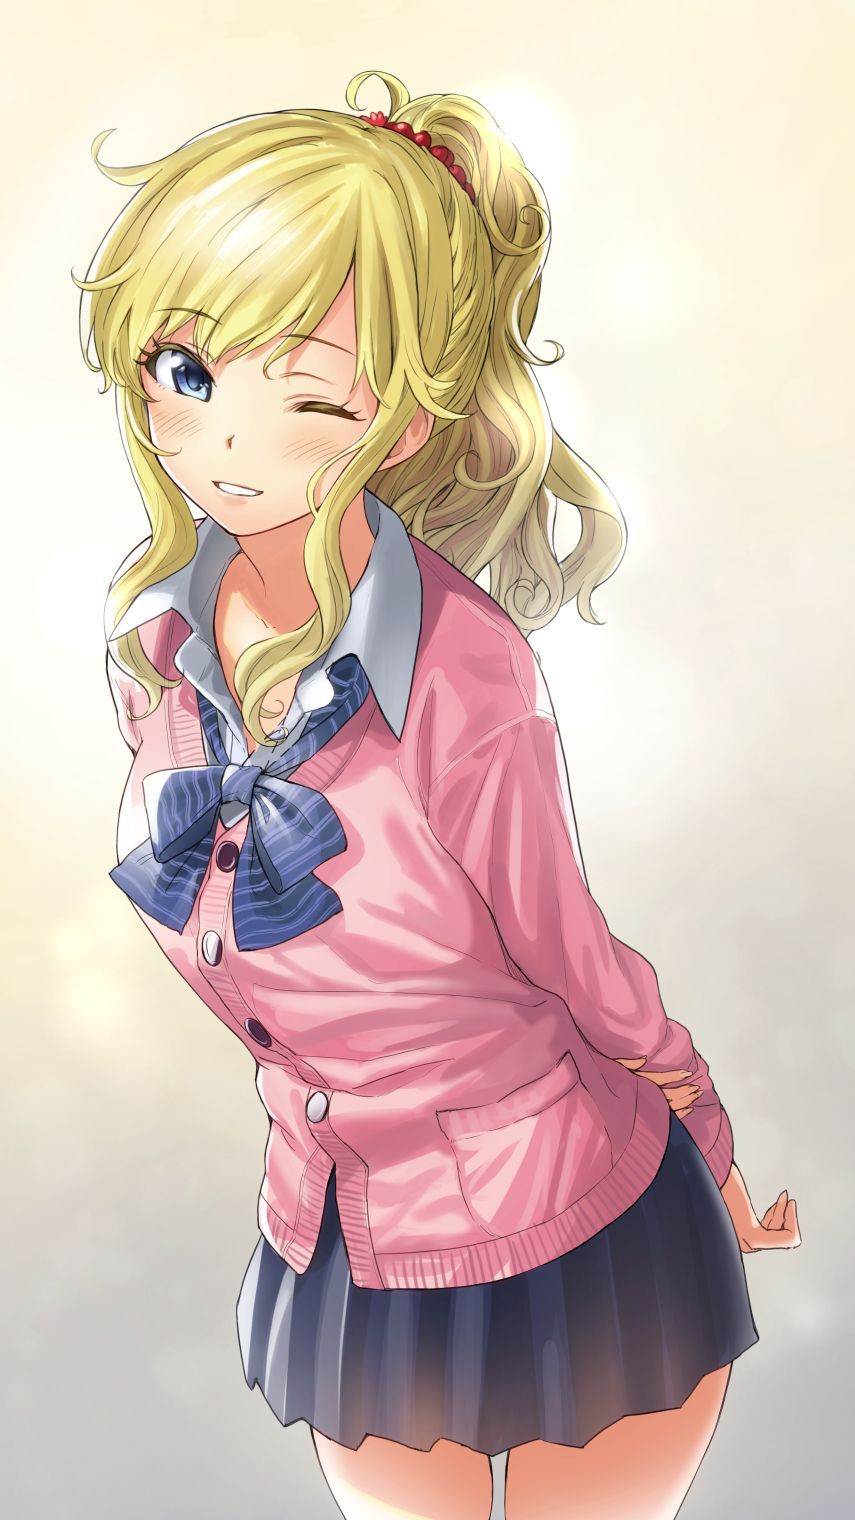 [Secondary] secondary image of a pretty girl wearing a school uniform Part 10 [uniform, non-erotic] 11